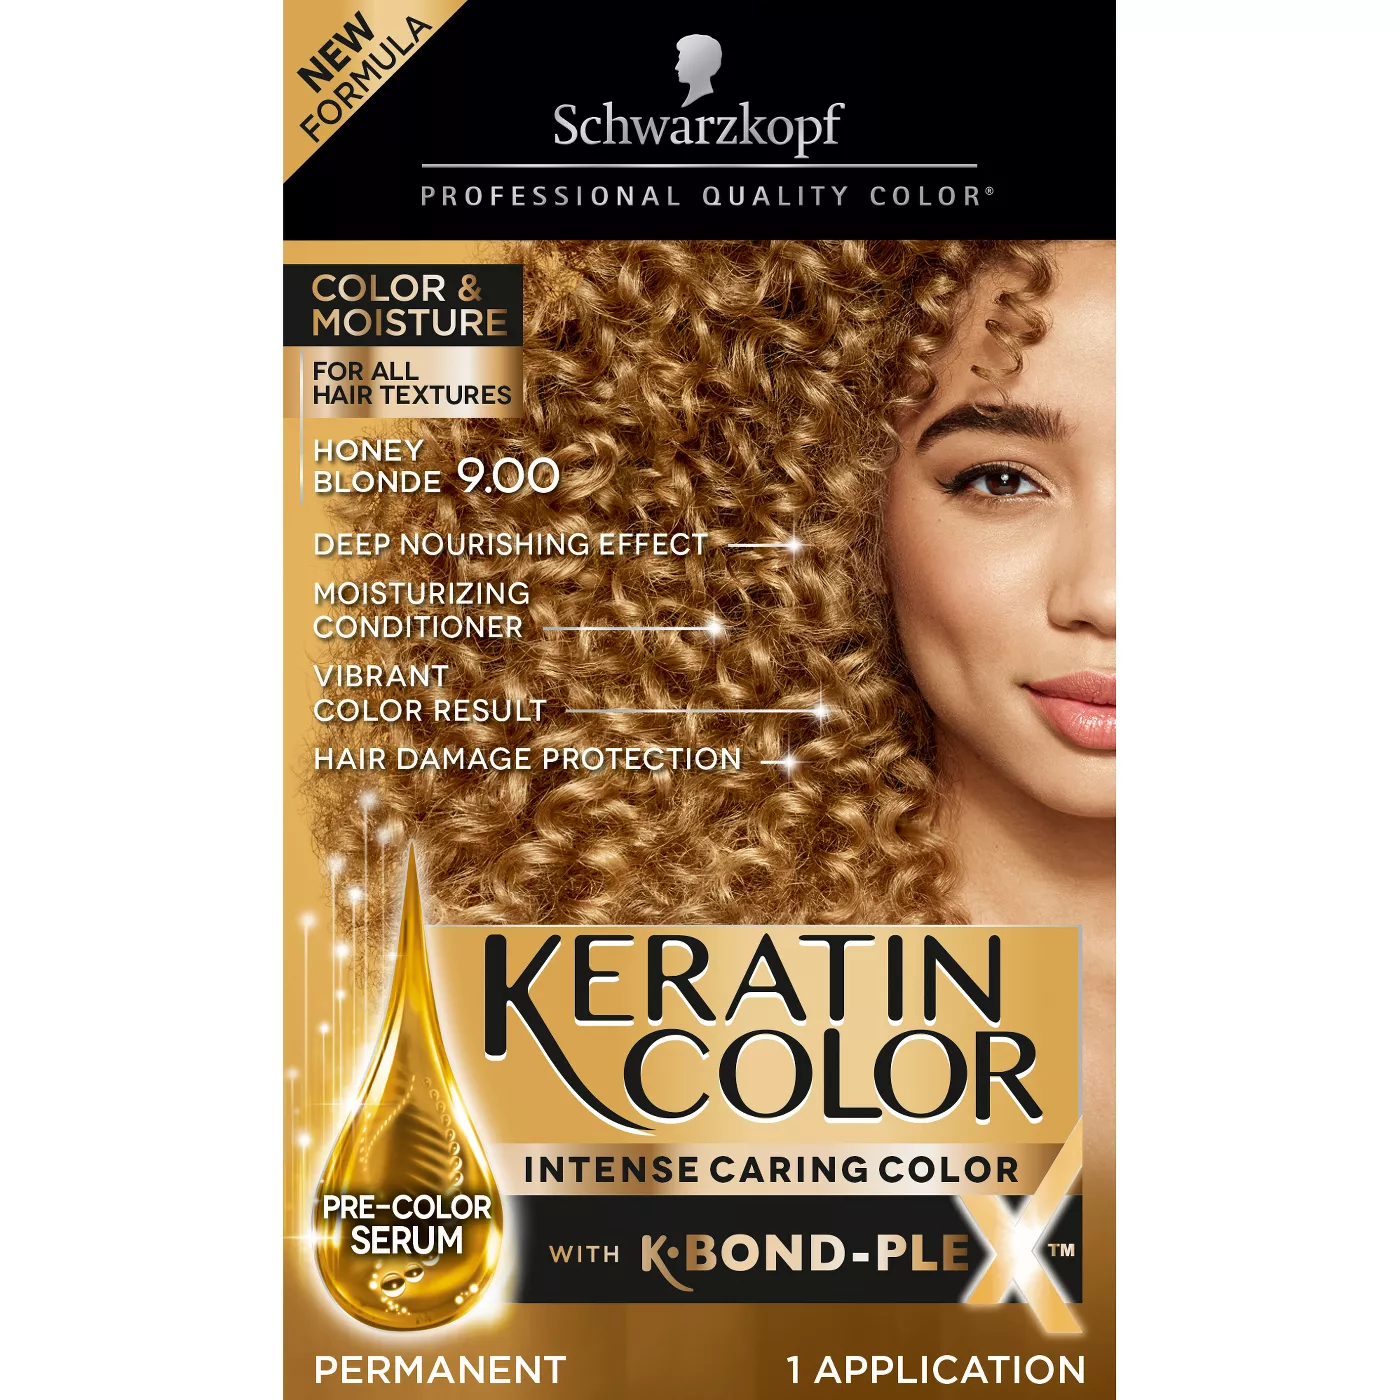 Keratin Hair Color